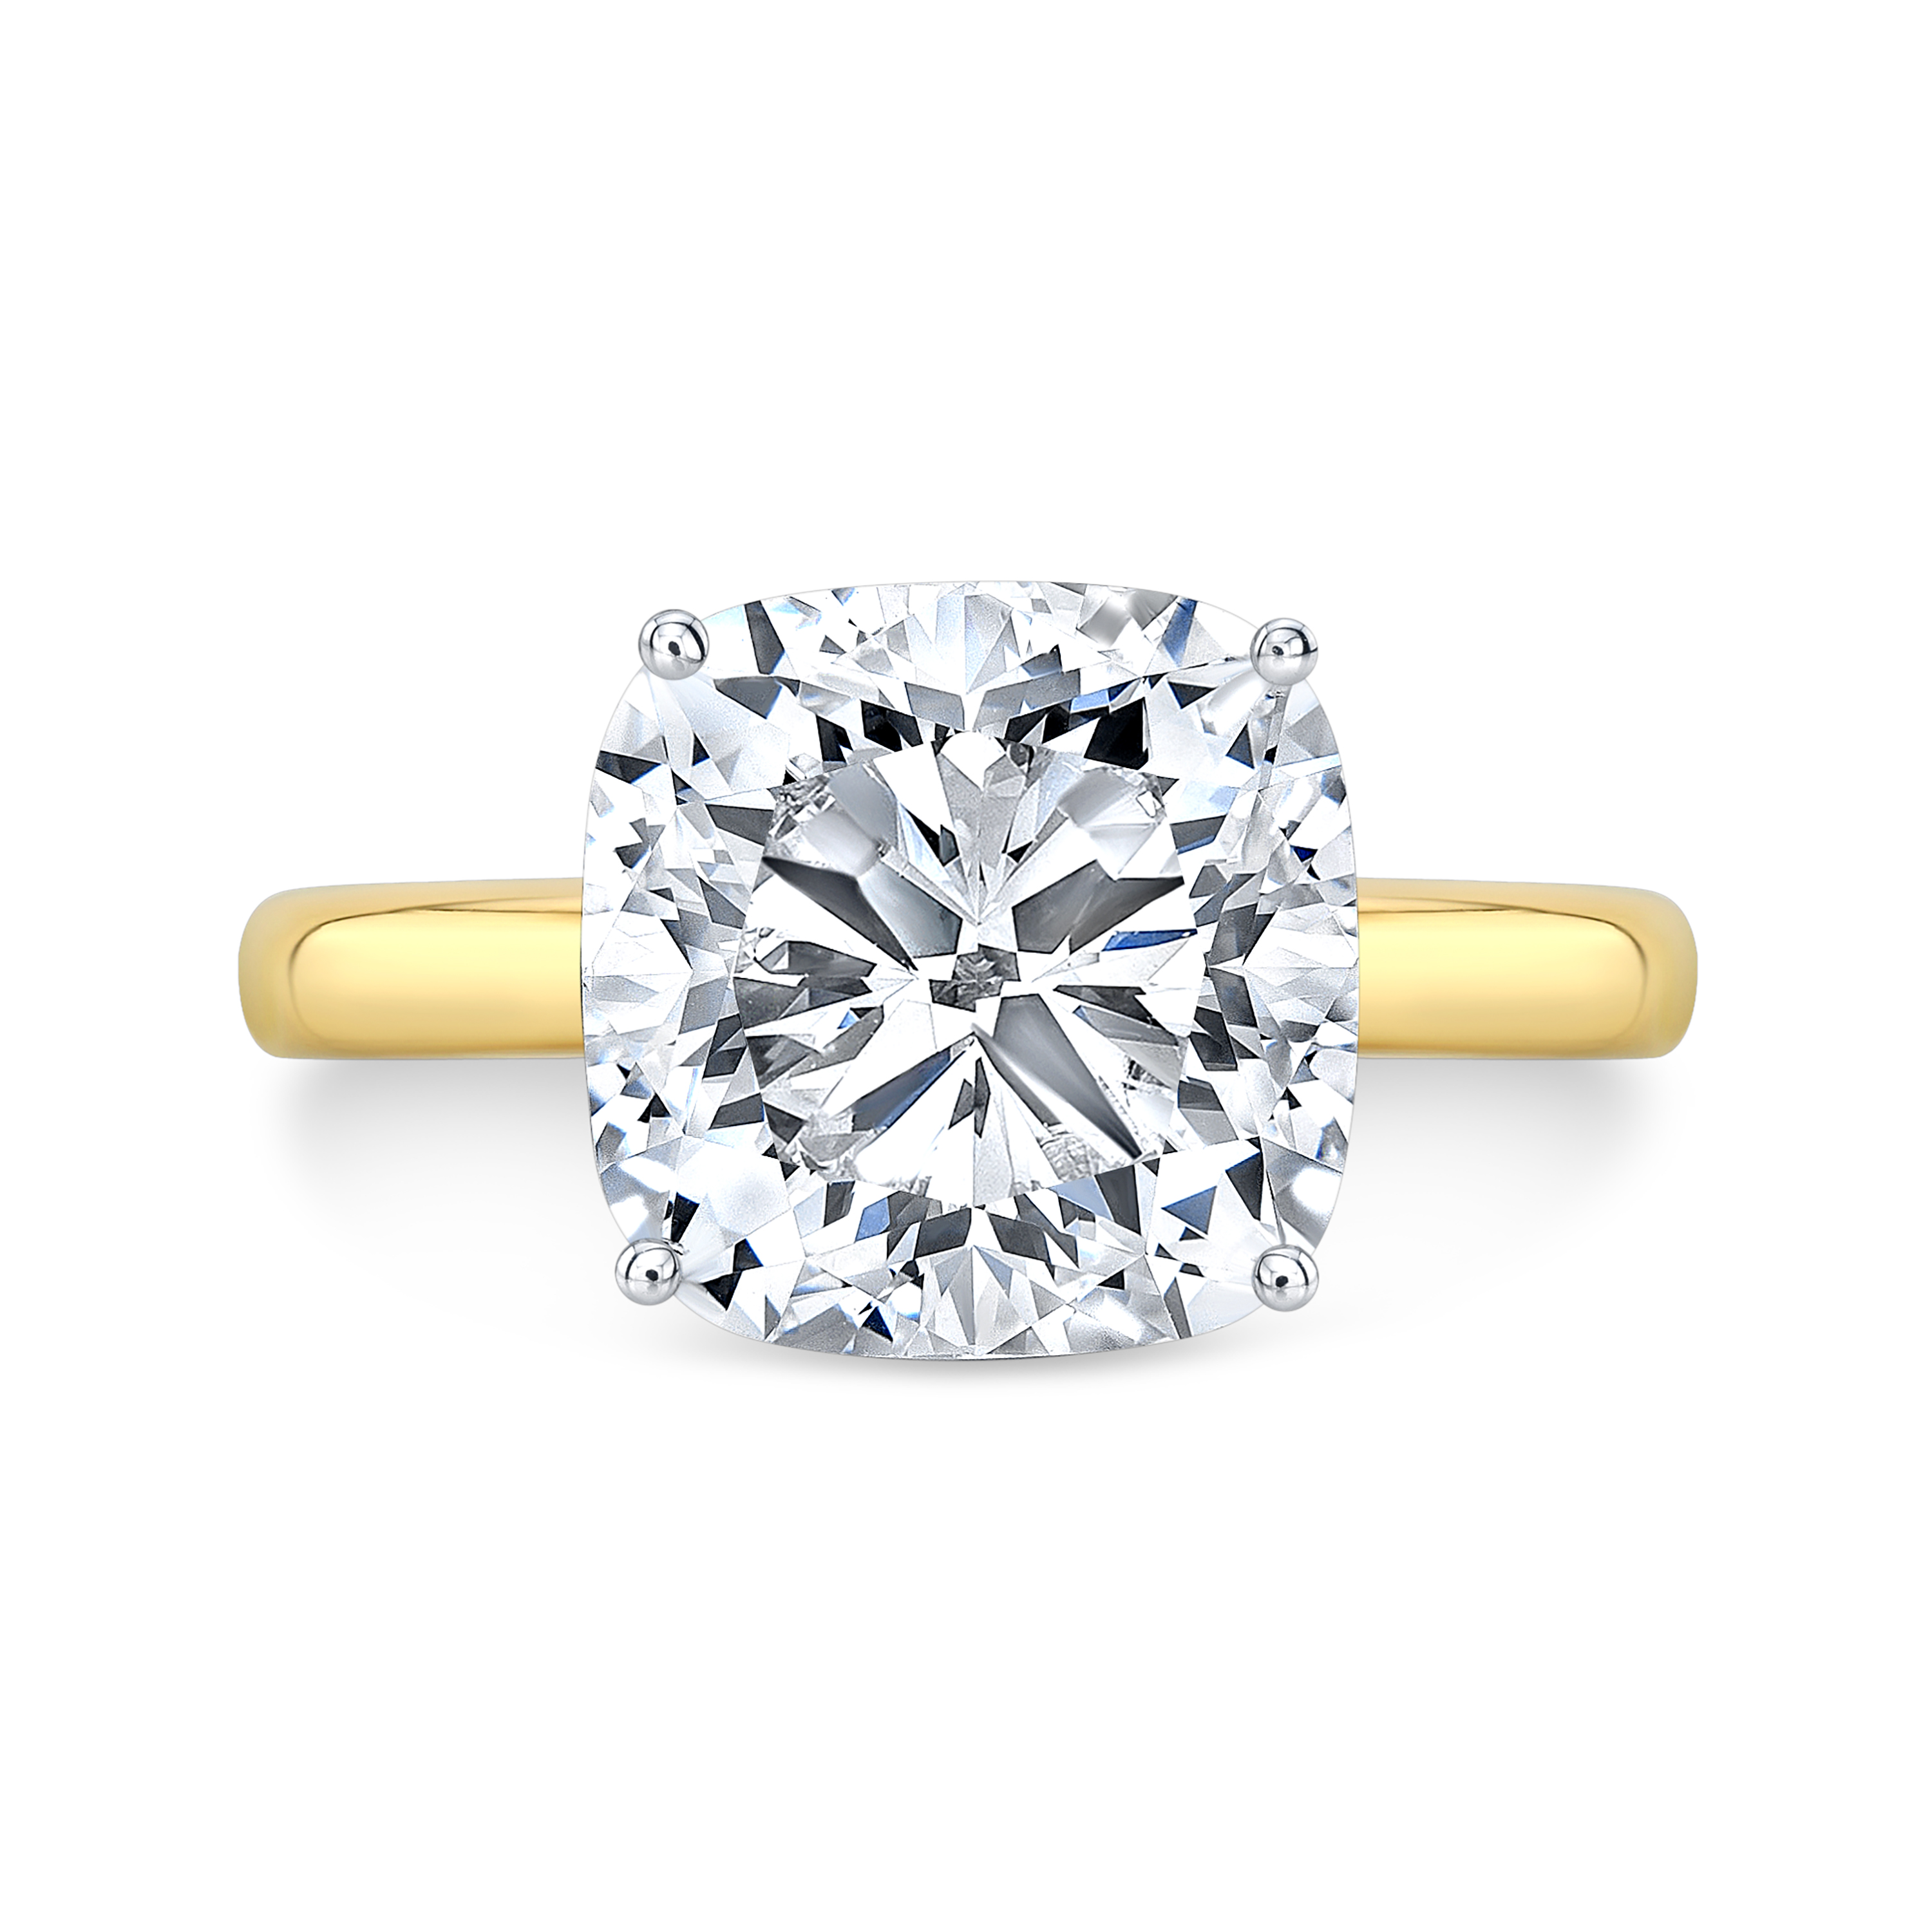 Beautiful Round Shape Cut Diamond Classic Ring 14k Yellow Gold over Jewelry